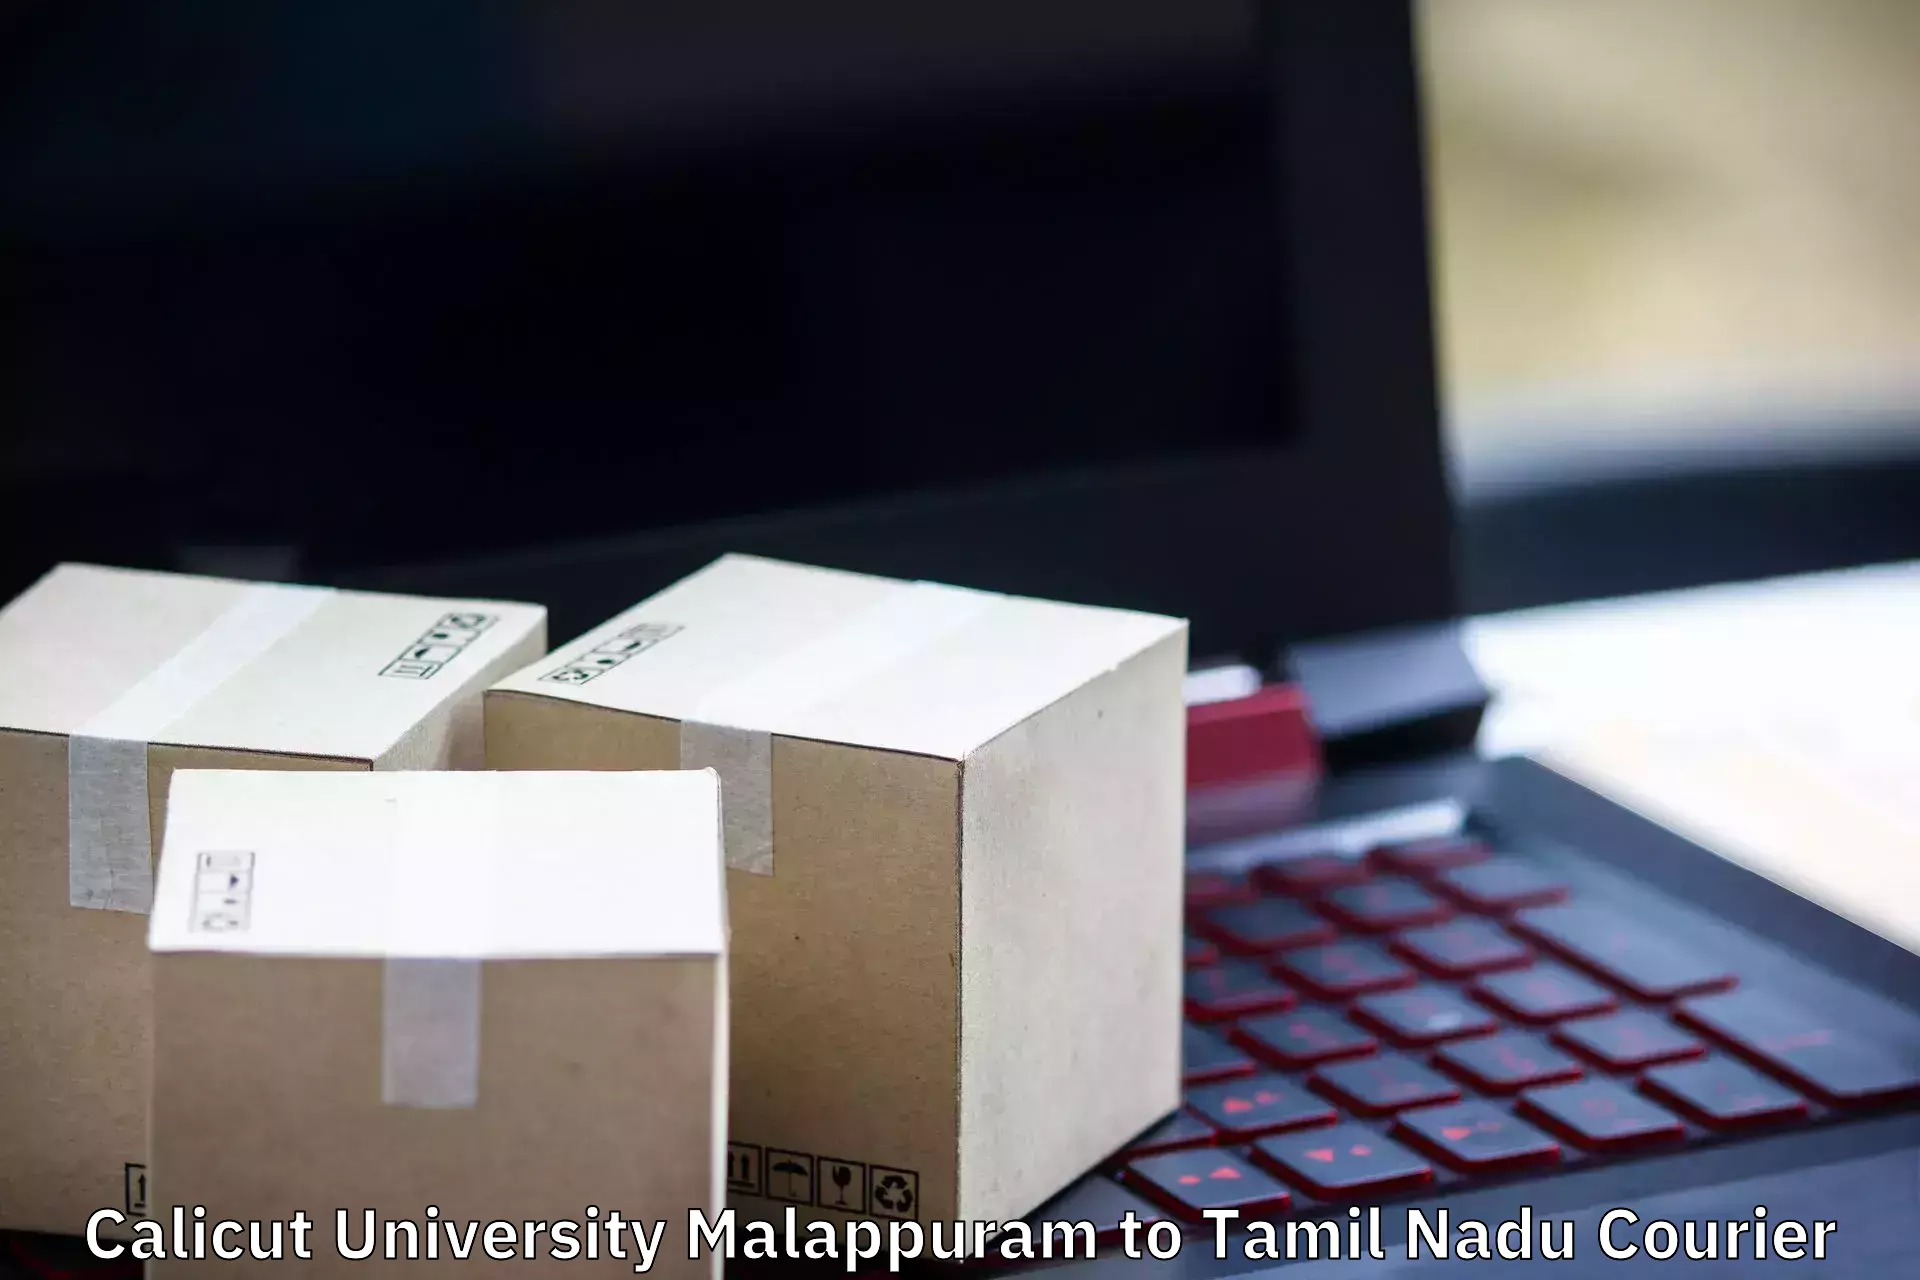 Furniture delivery service Calicut University Malappuram to Ambasamudram